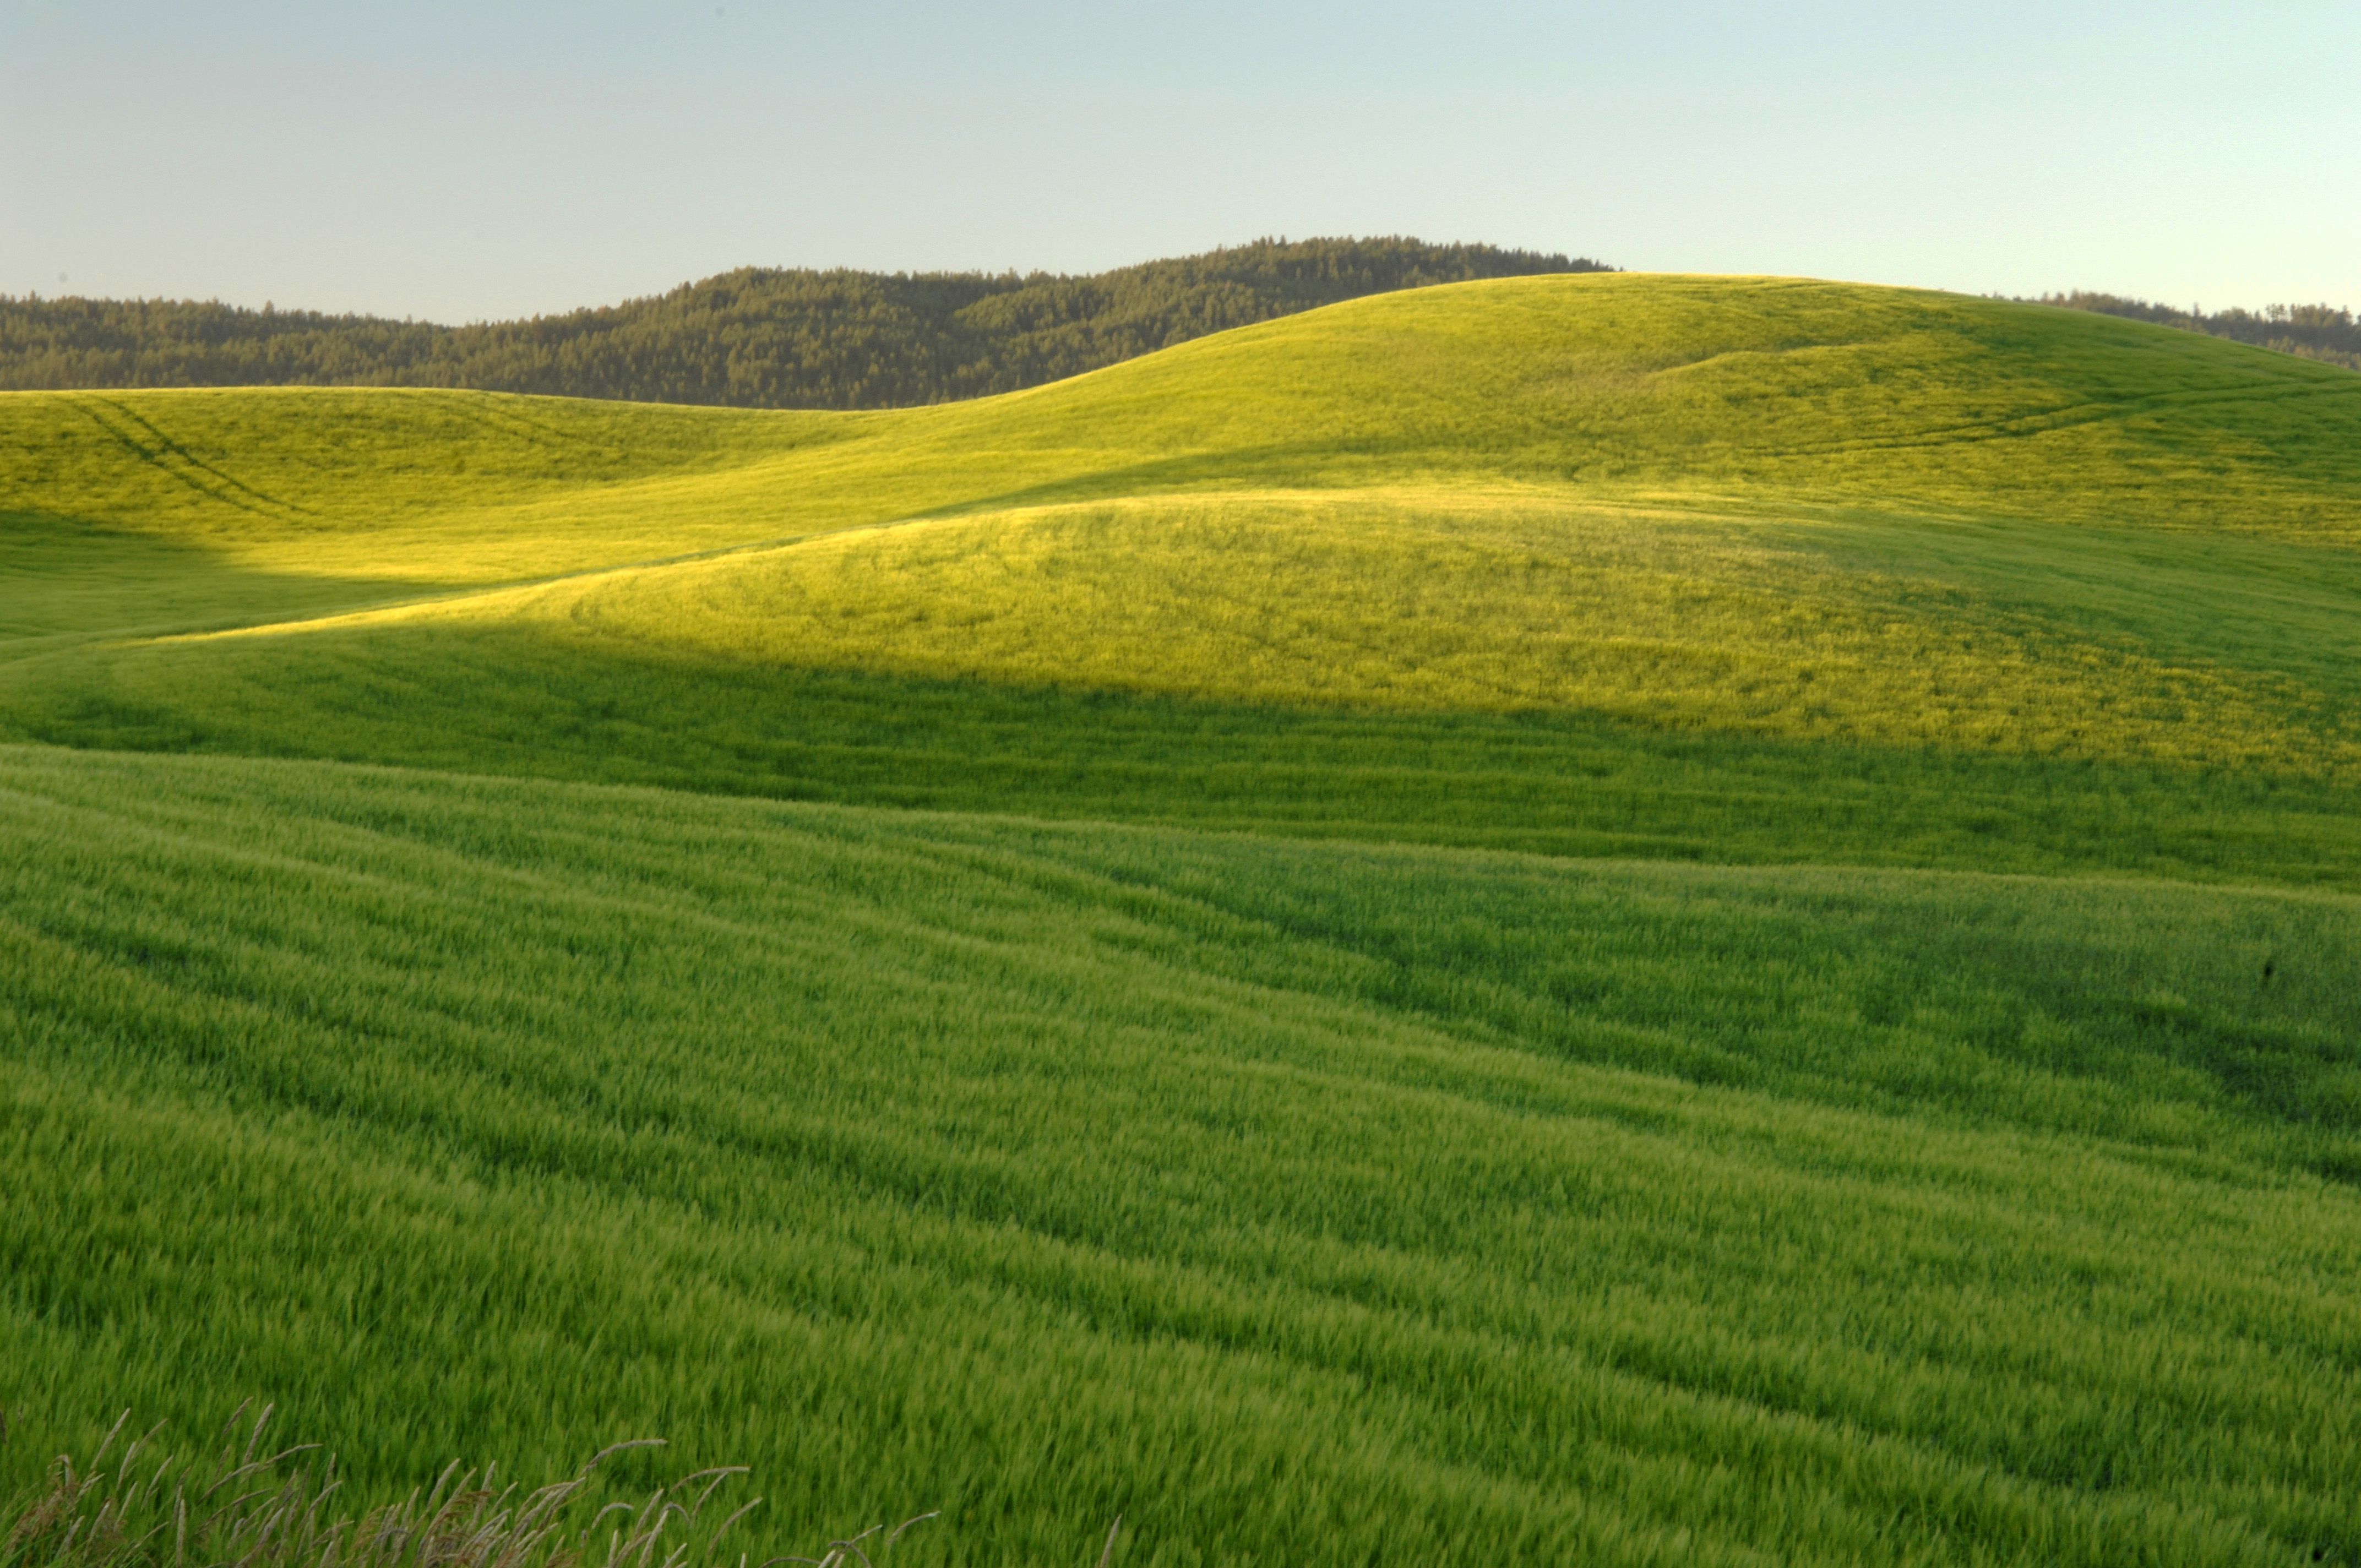 Green, Grassy hills landscape image - Free stock photo - Public Domain